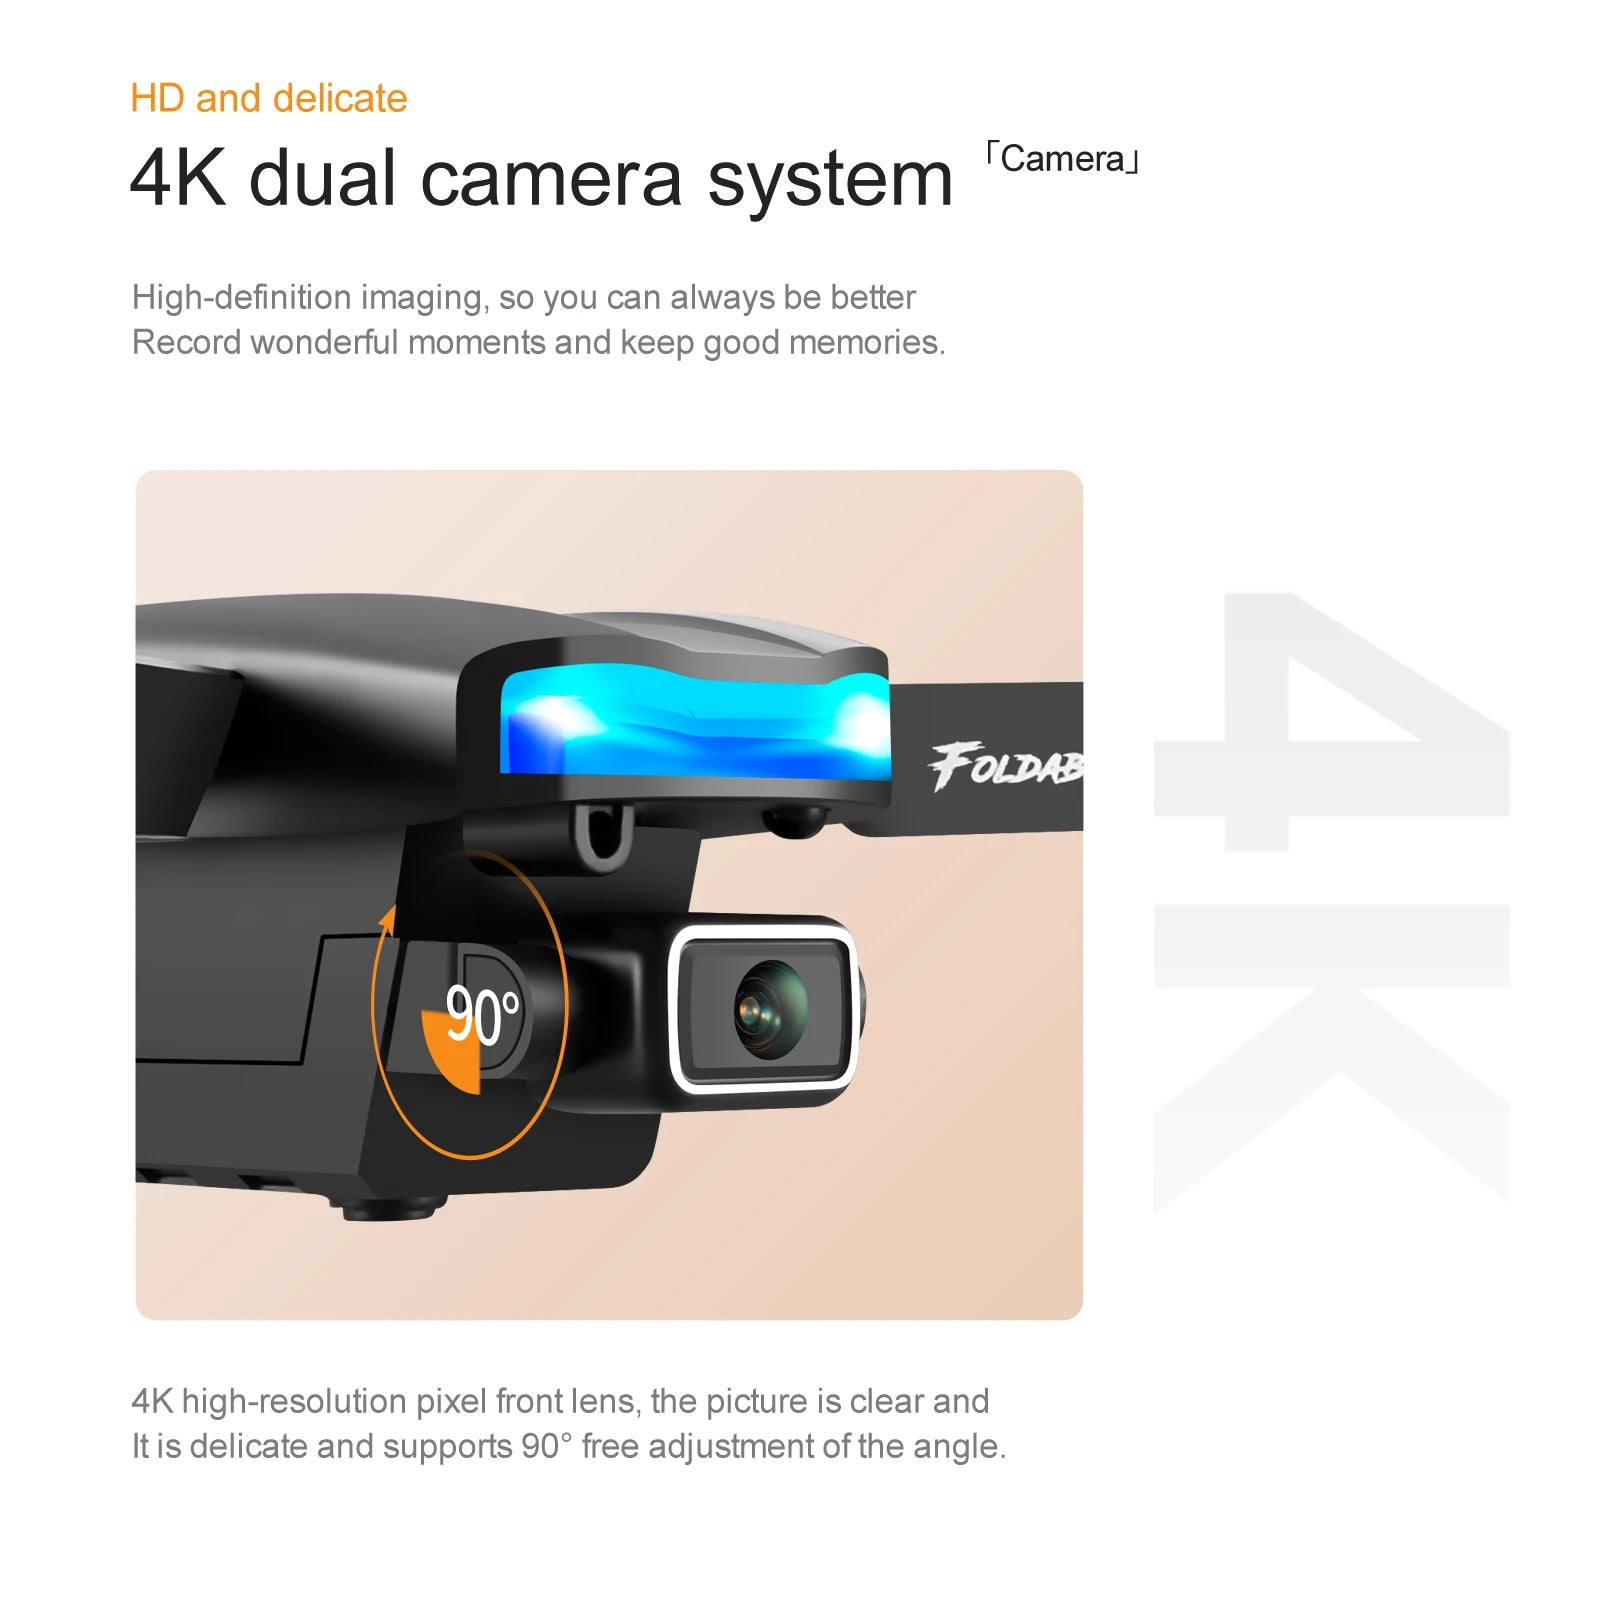 S85 Drone, folbke 4k high-resolution pixel front lens